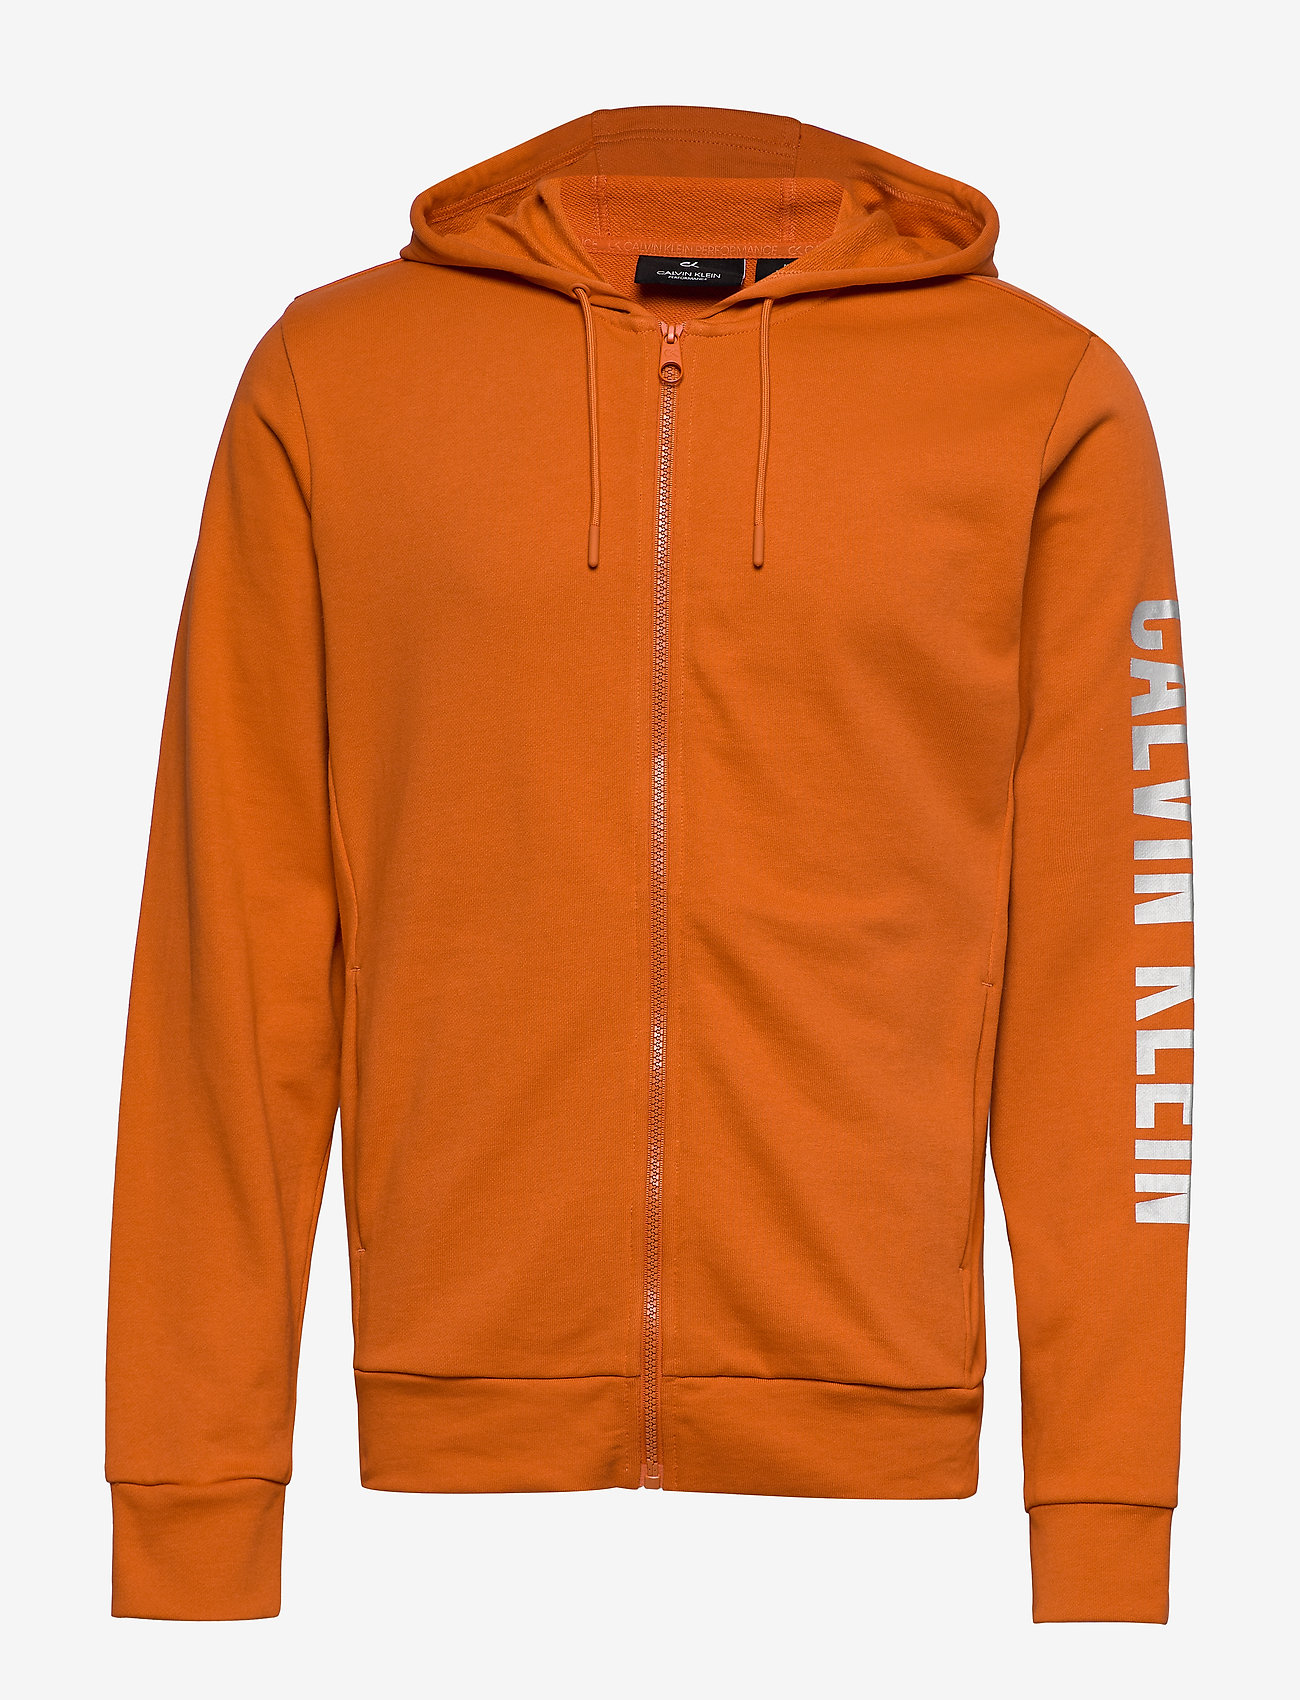 orange calvin klein hoodie